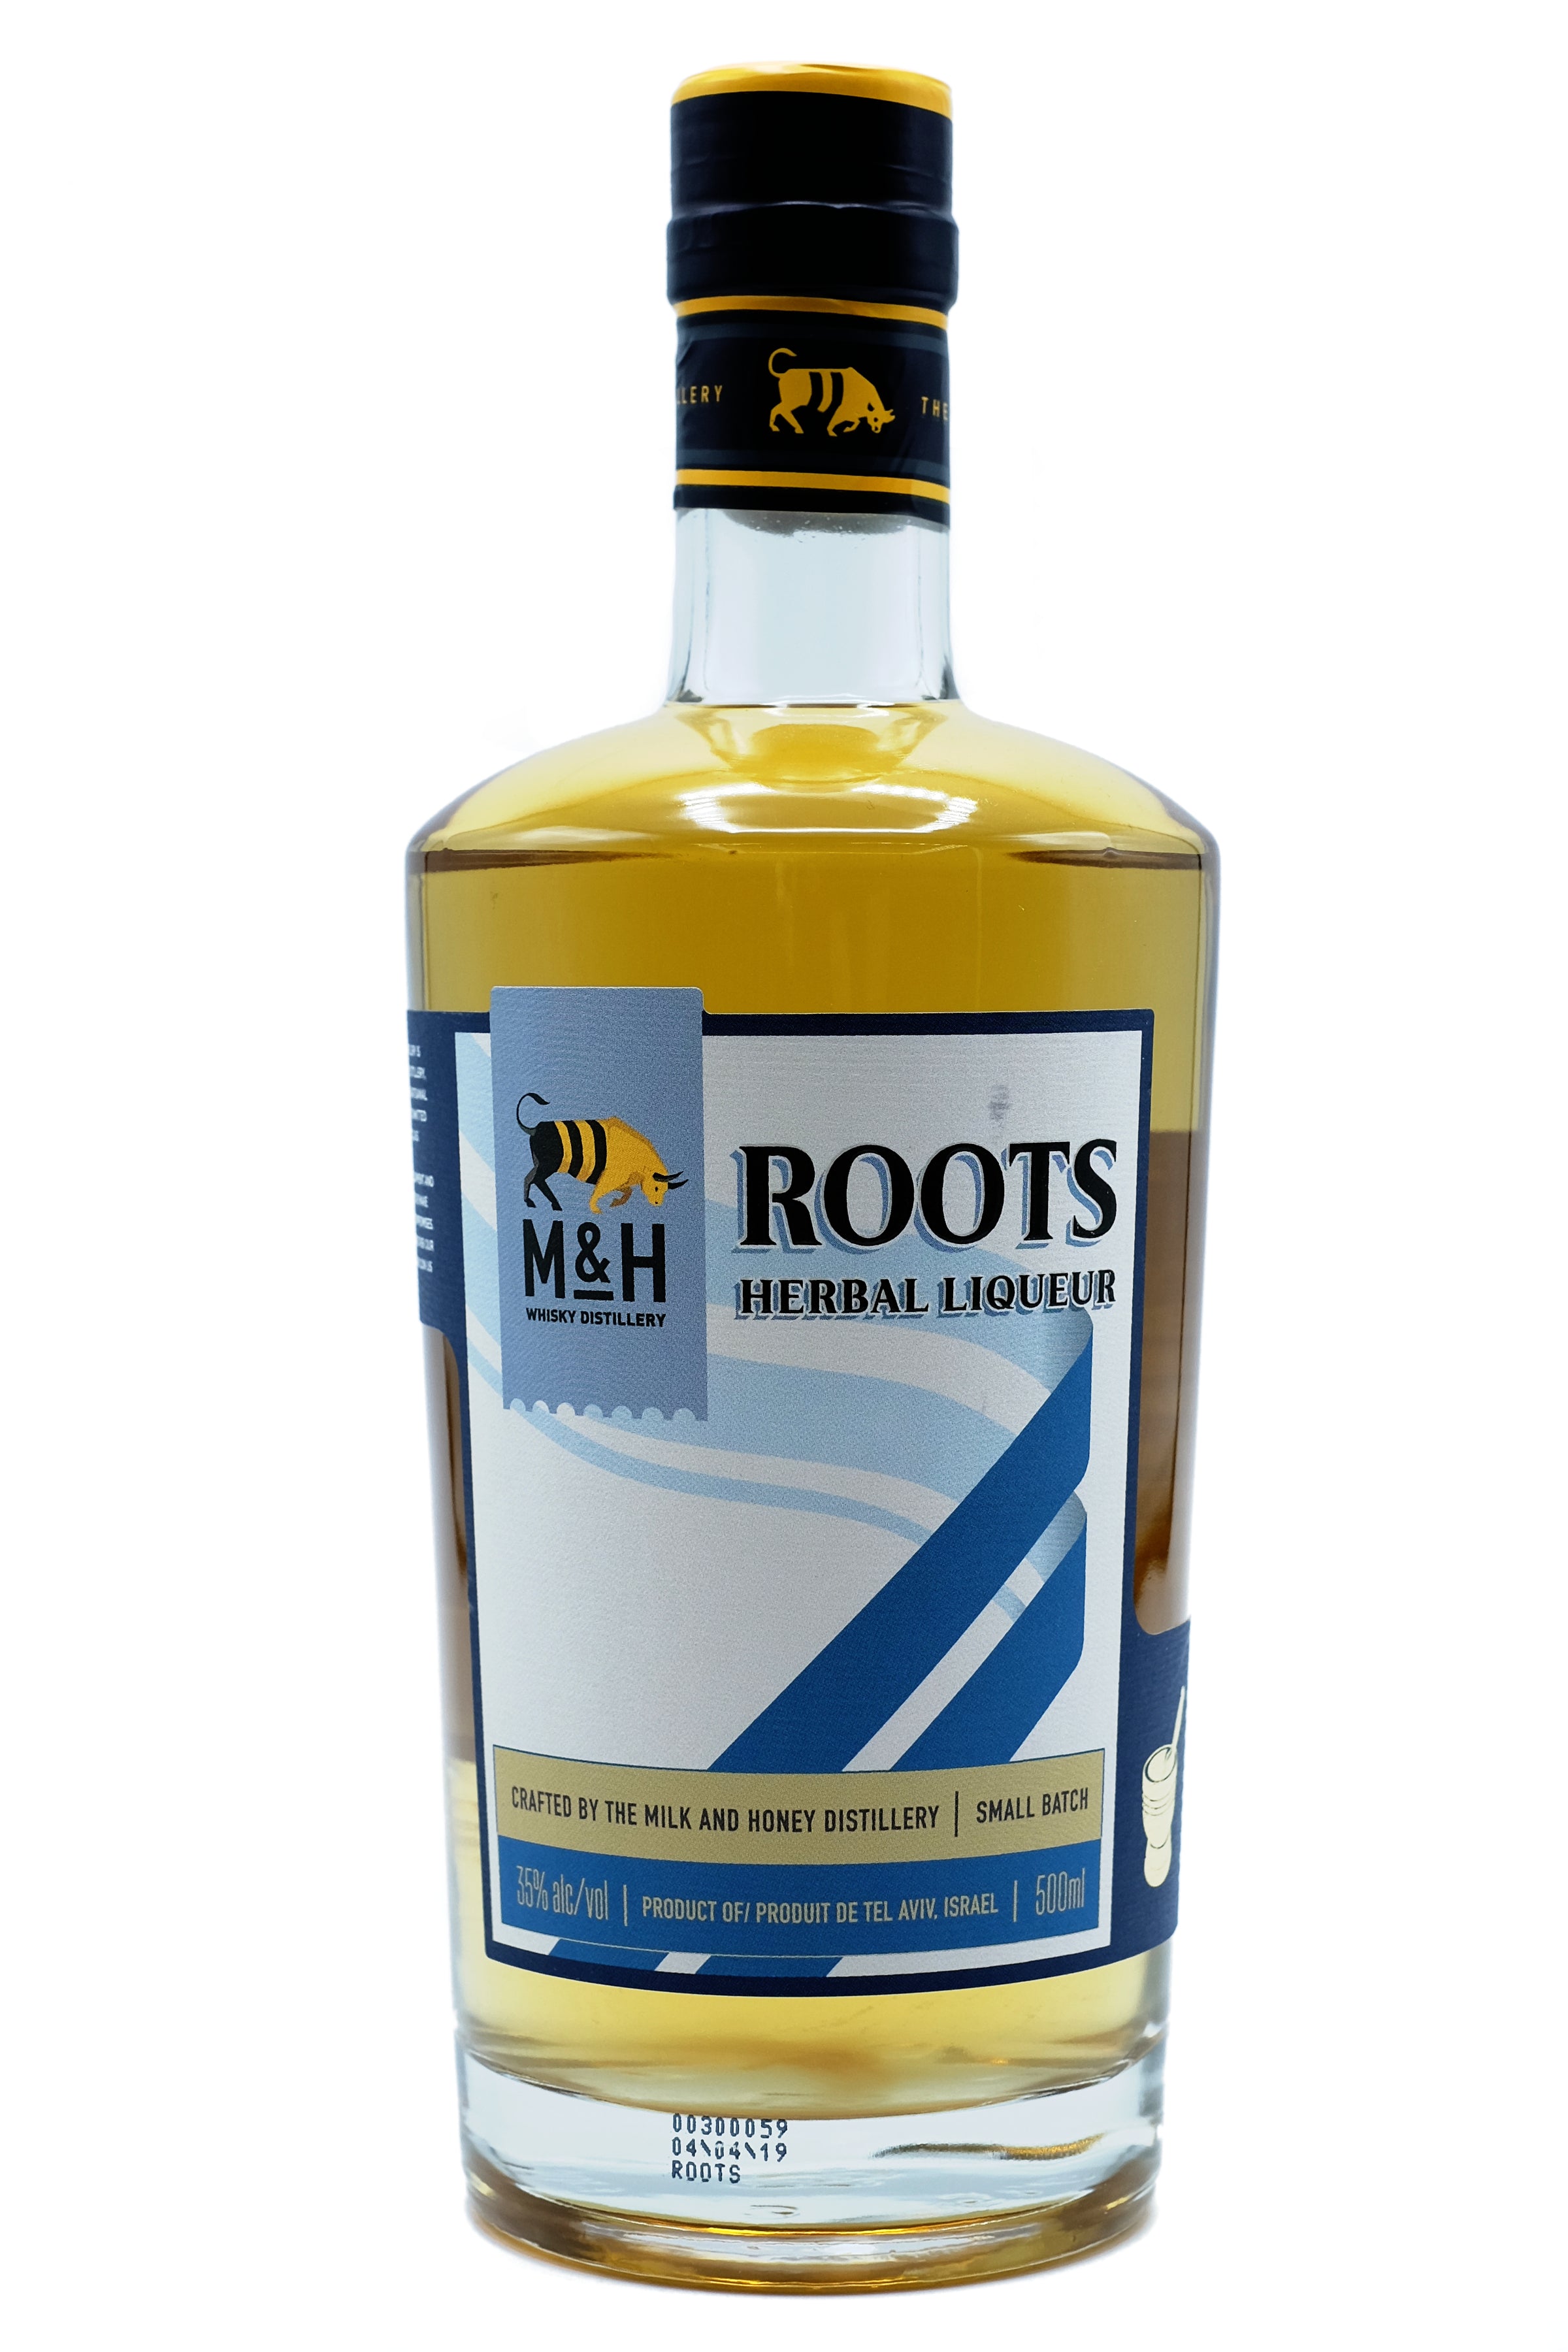 M&H Roots Herbal Liquor